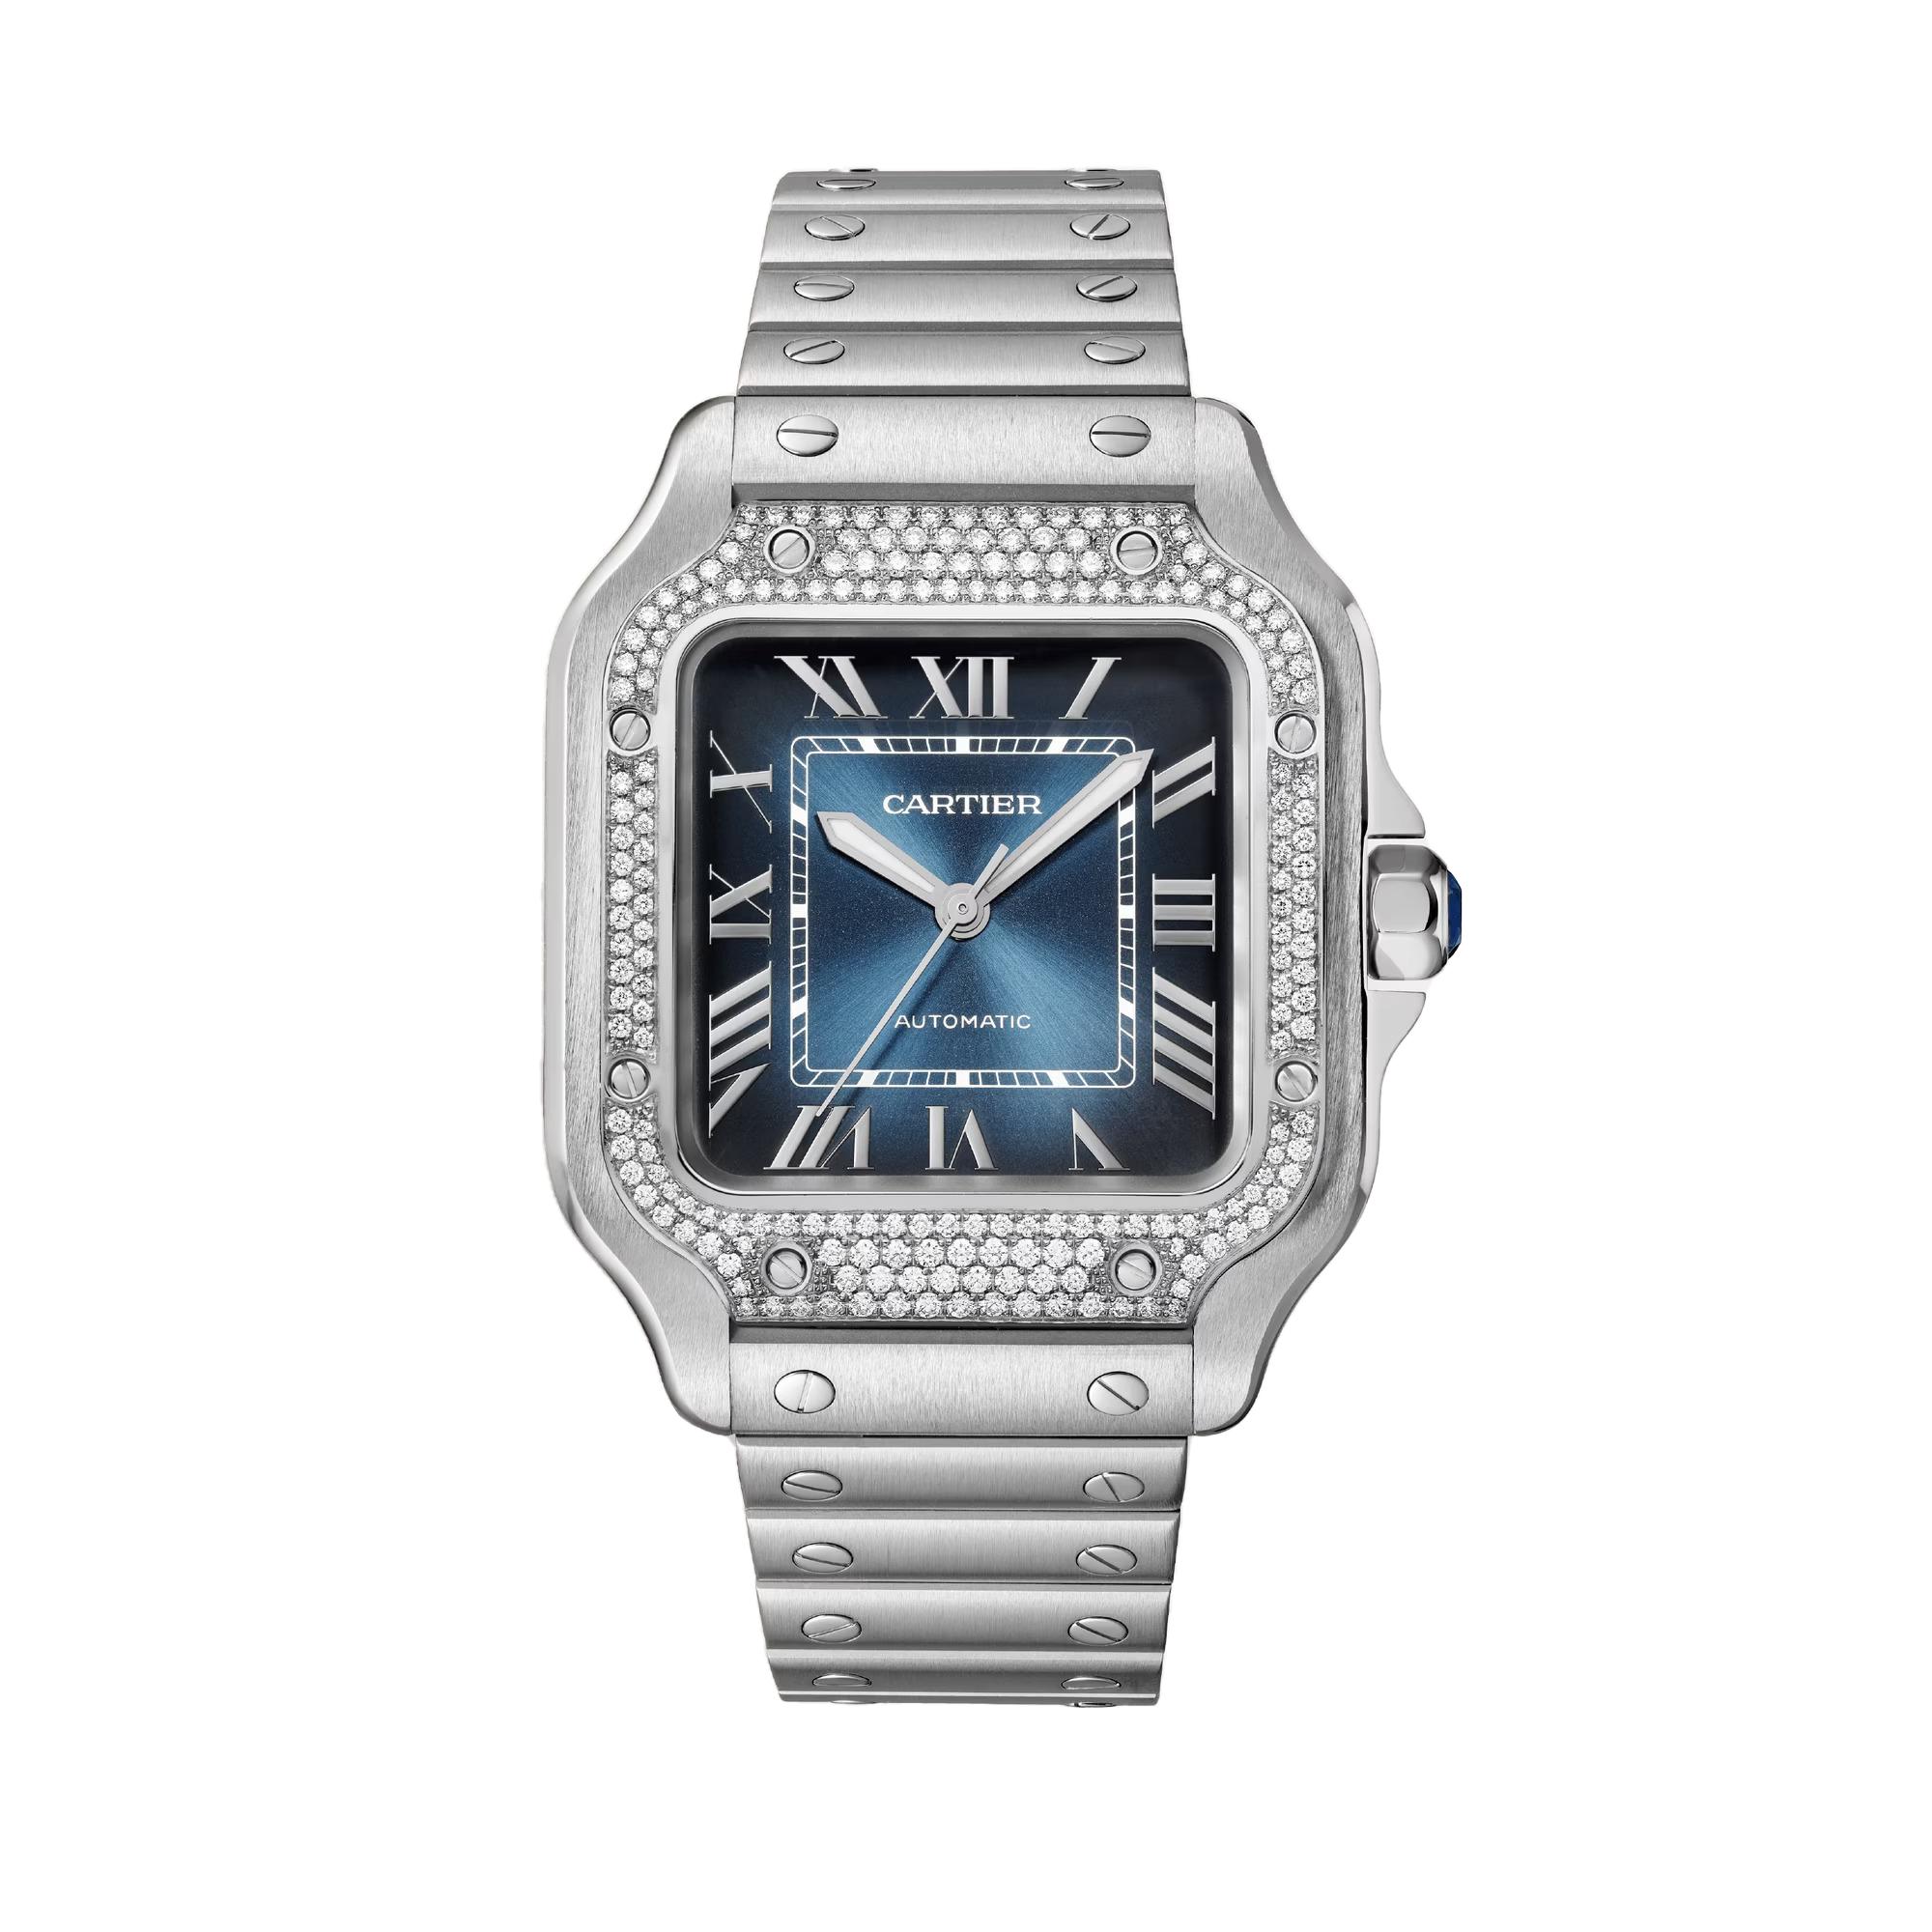 Santos de Cartier watch with Blue Dial and Diamonds, size medium